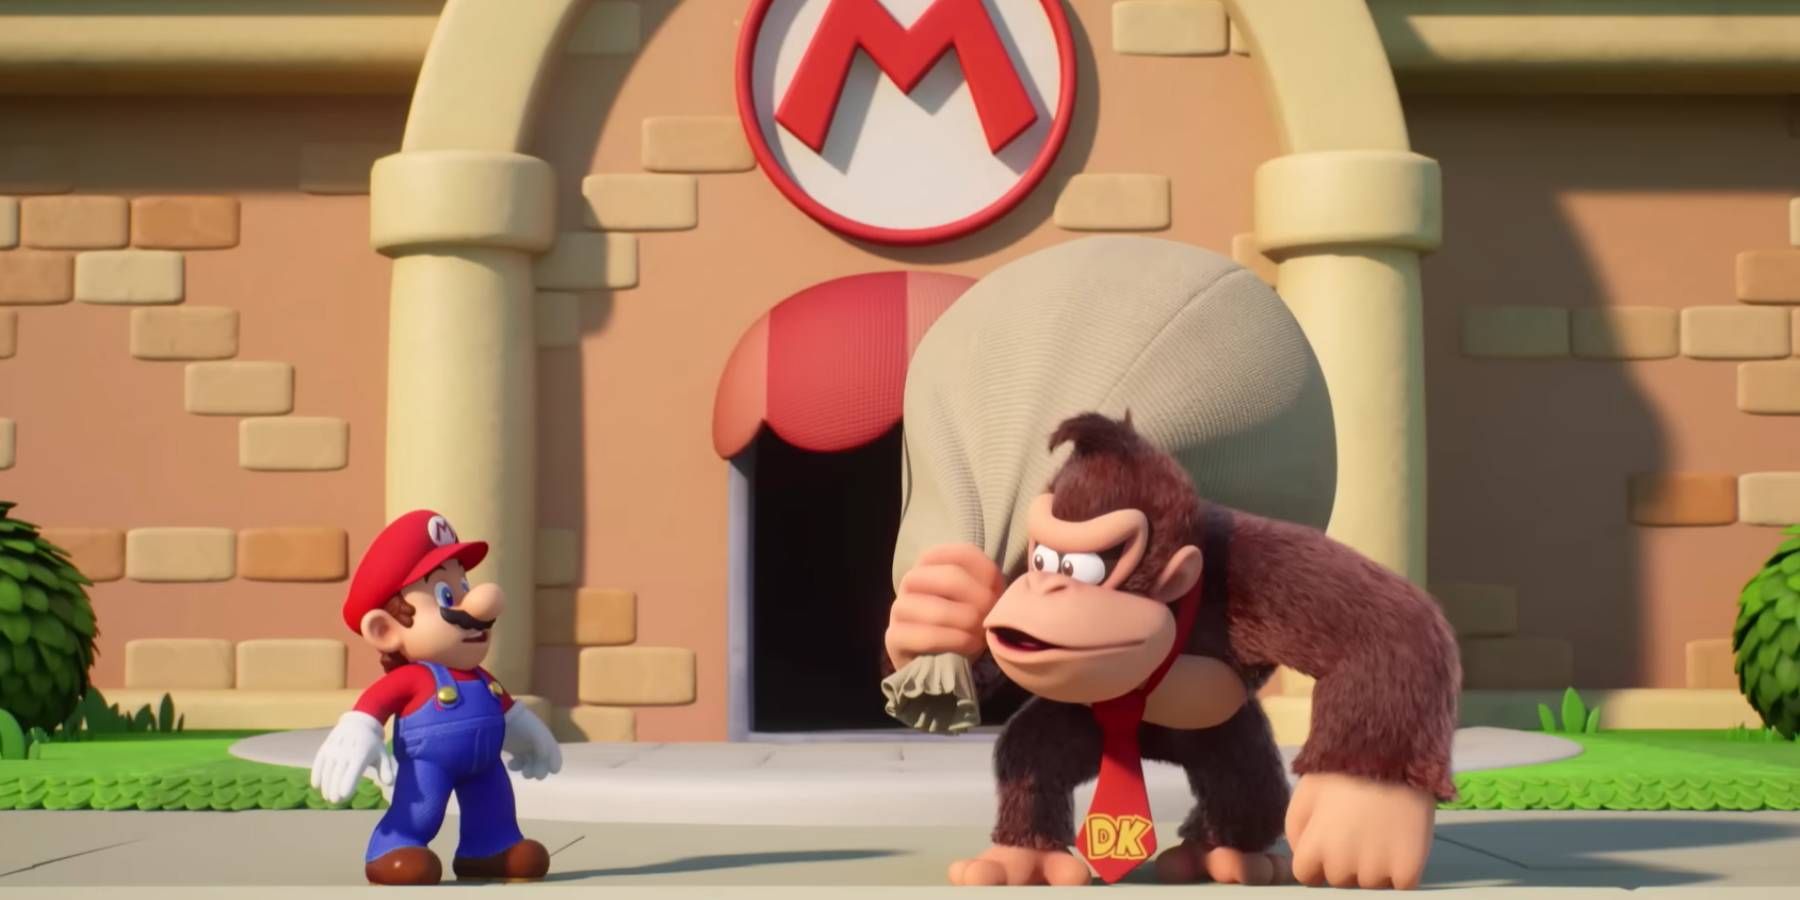 Mario and Donkey Kong in a cutscene for Mario vs. Donkey Kong